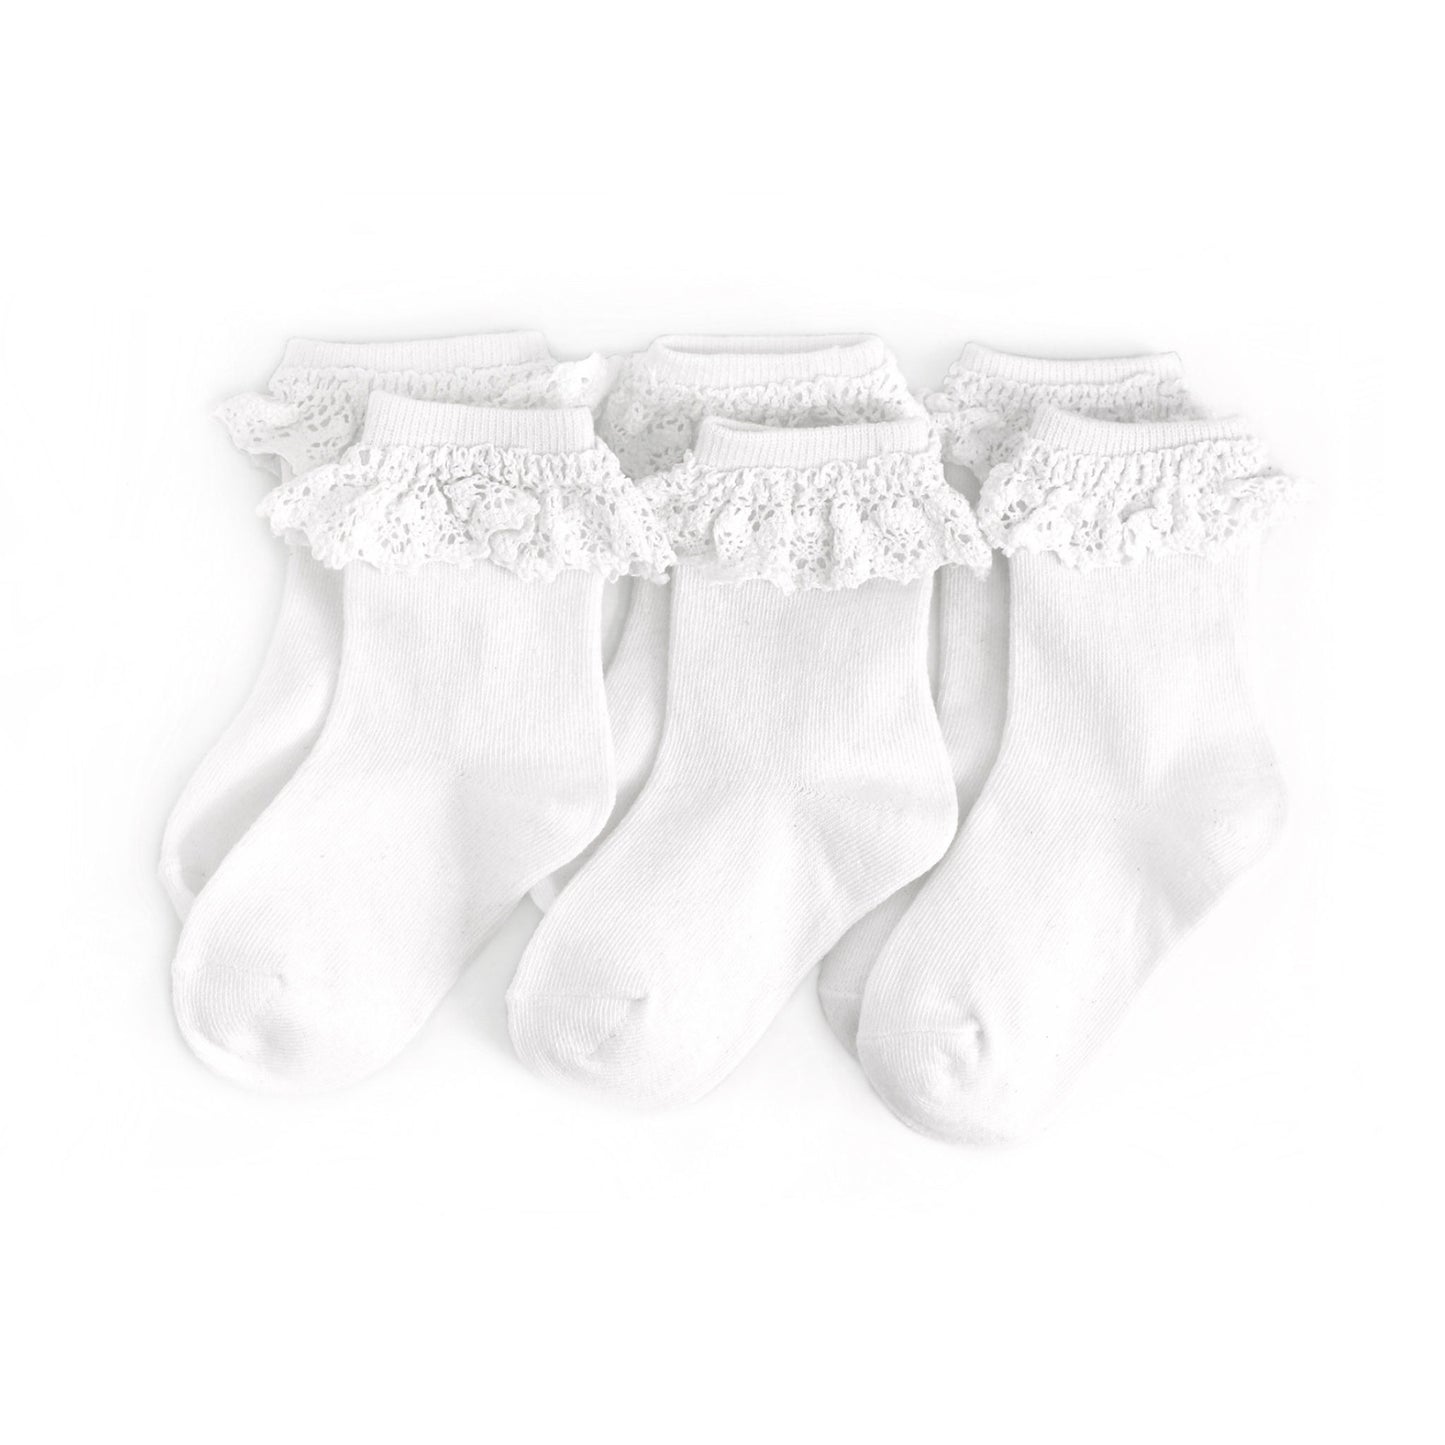 White Midi Lace Socks - 3 pack - Little Stocking Co